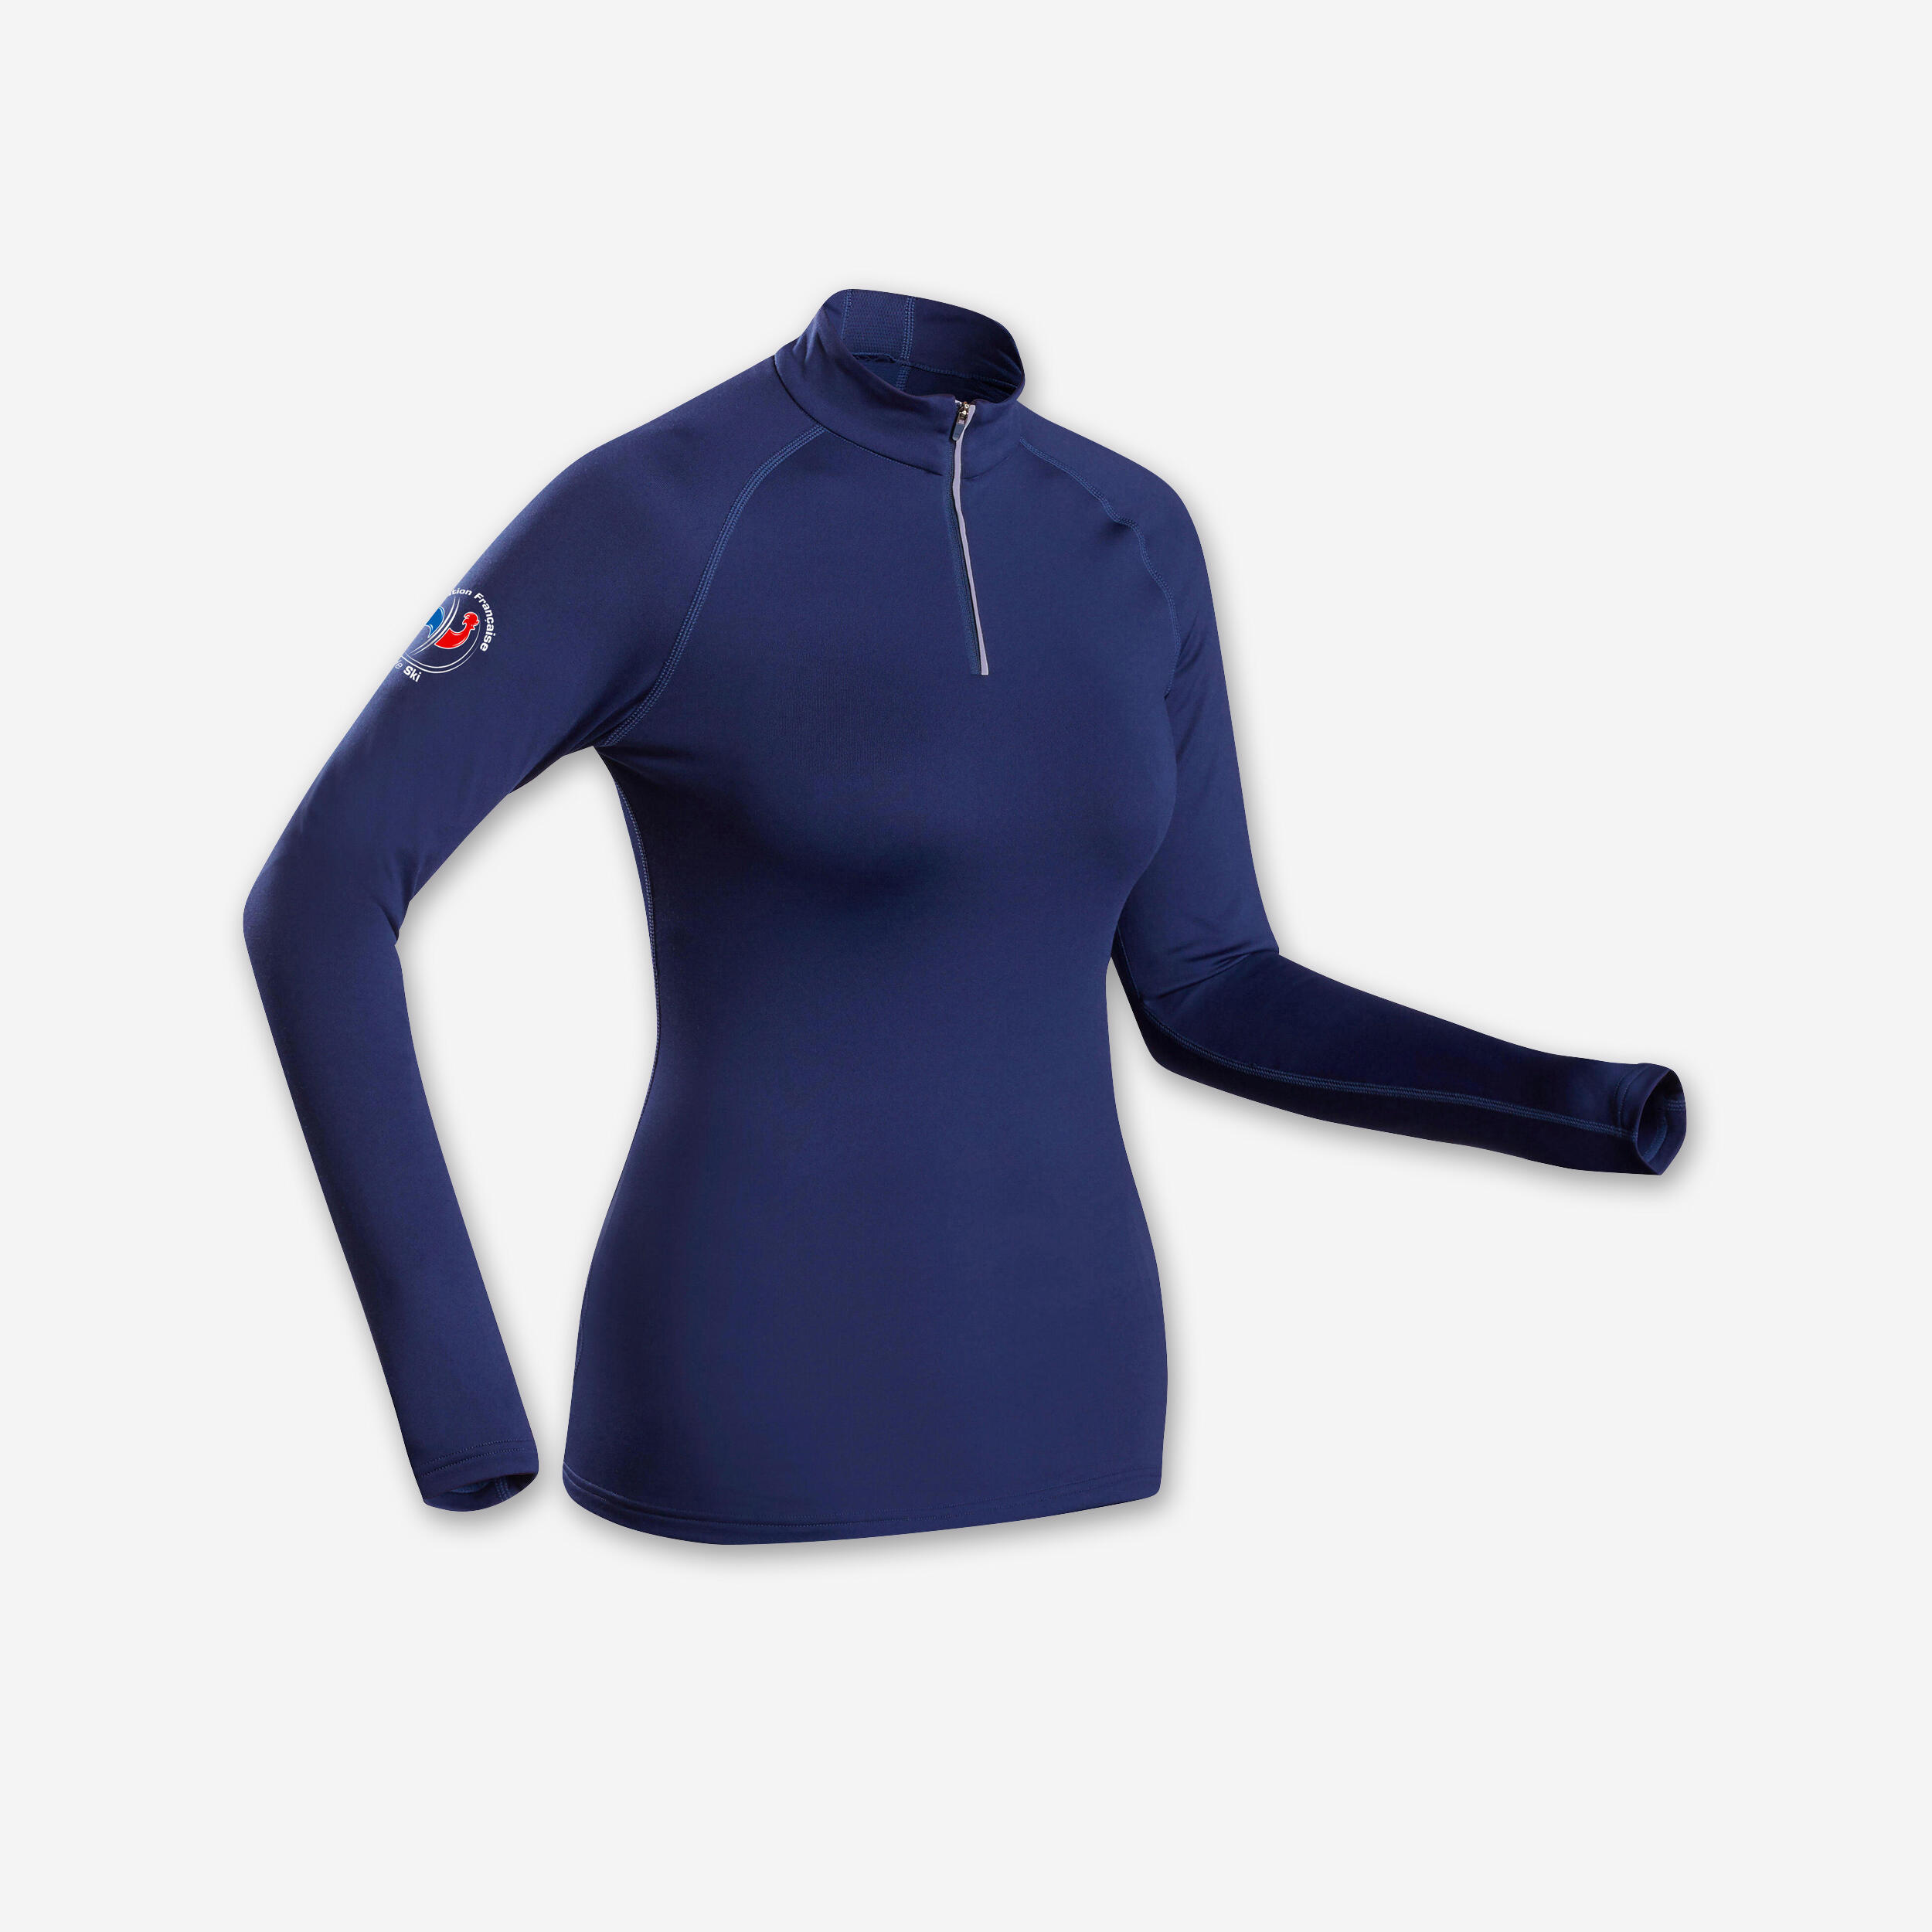 Women's 500 FFS thermal base layer 1/2 zip ski top - navy blue